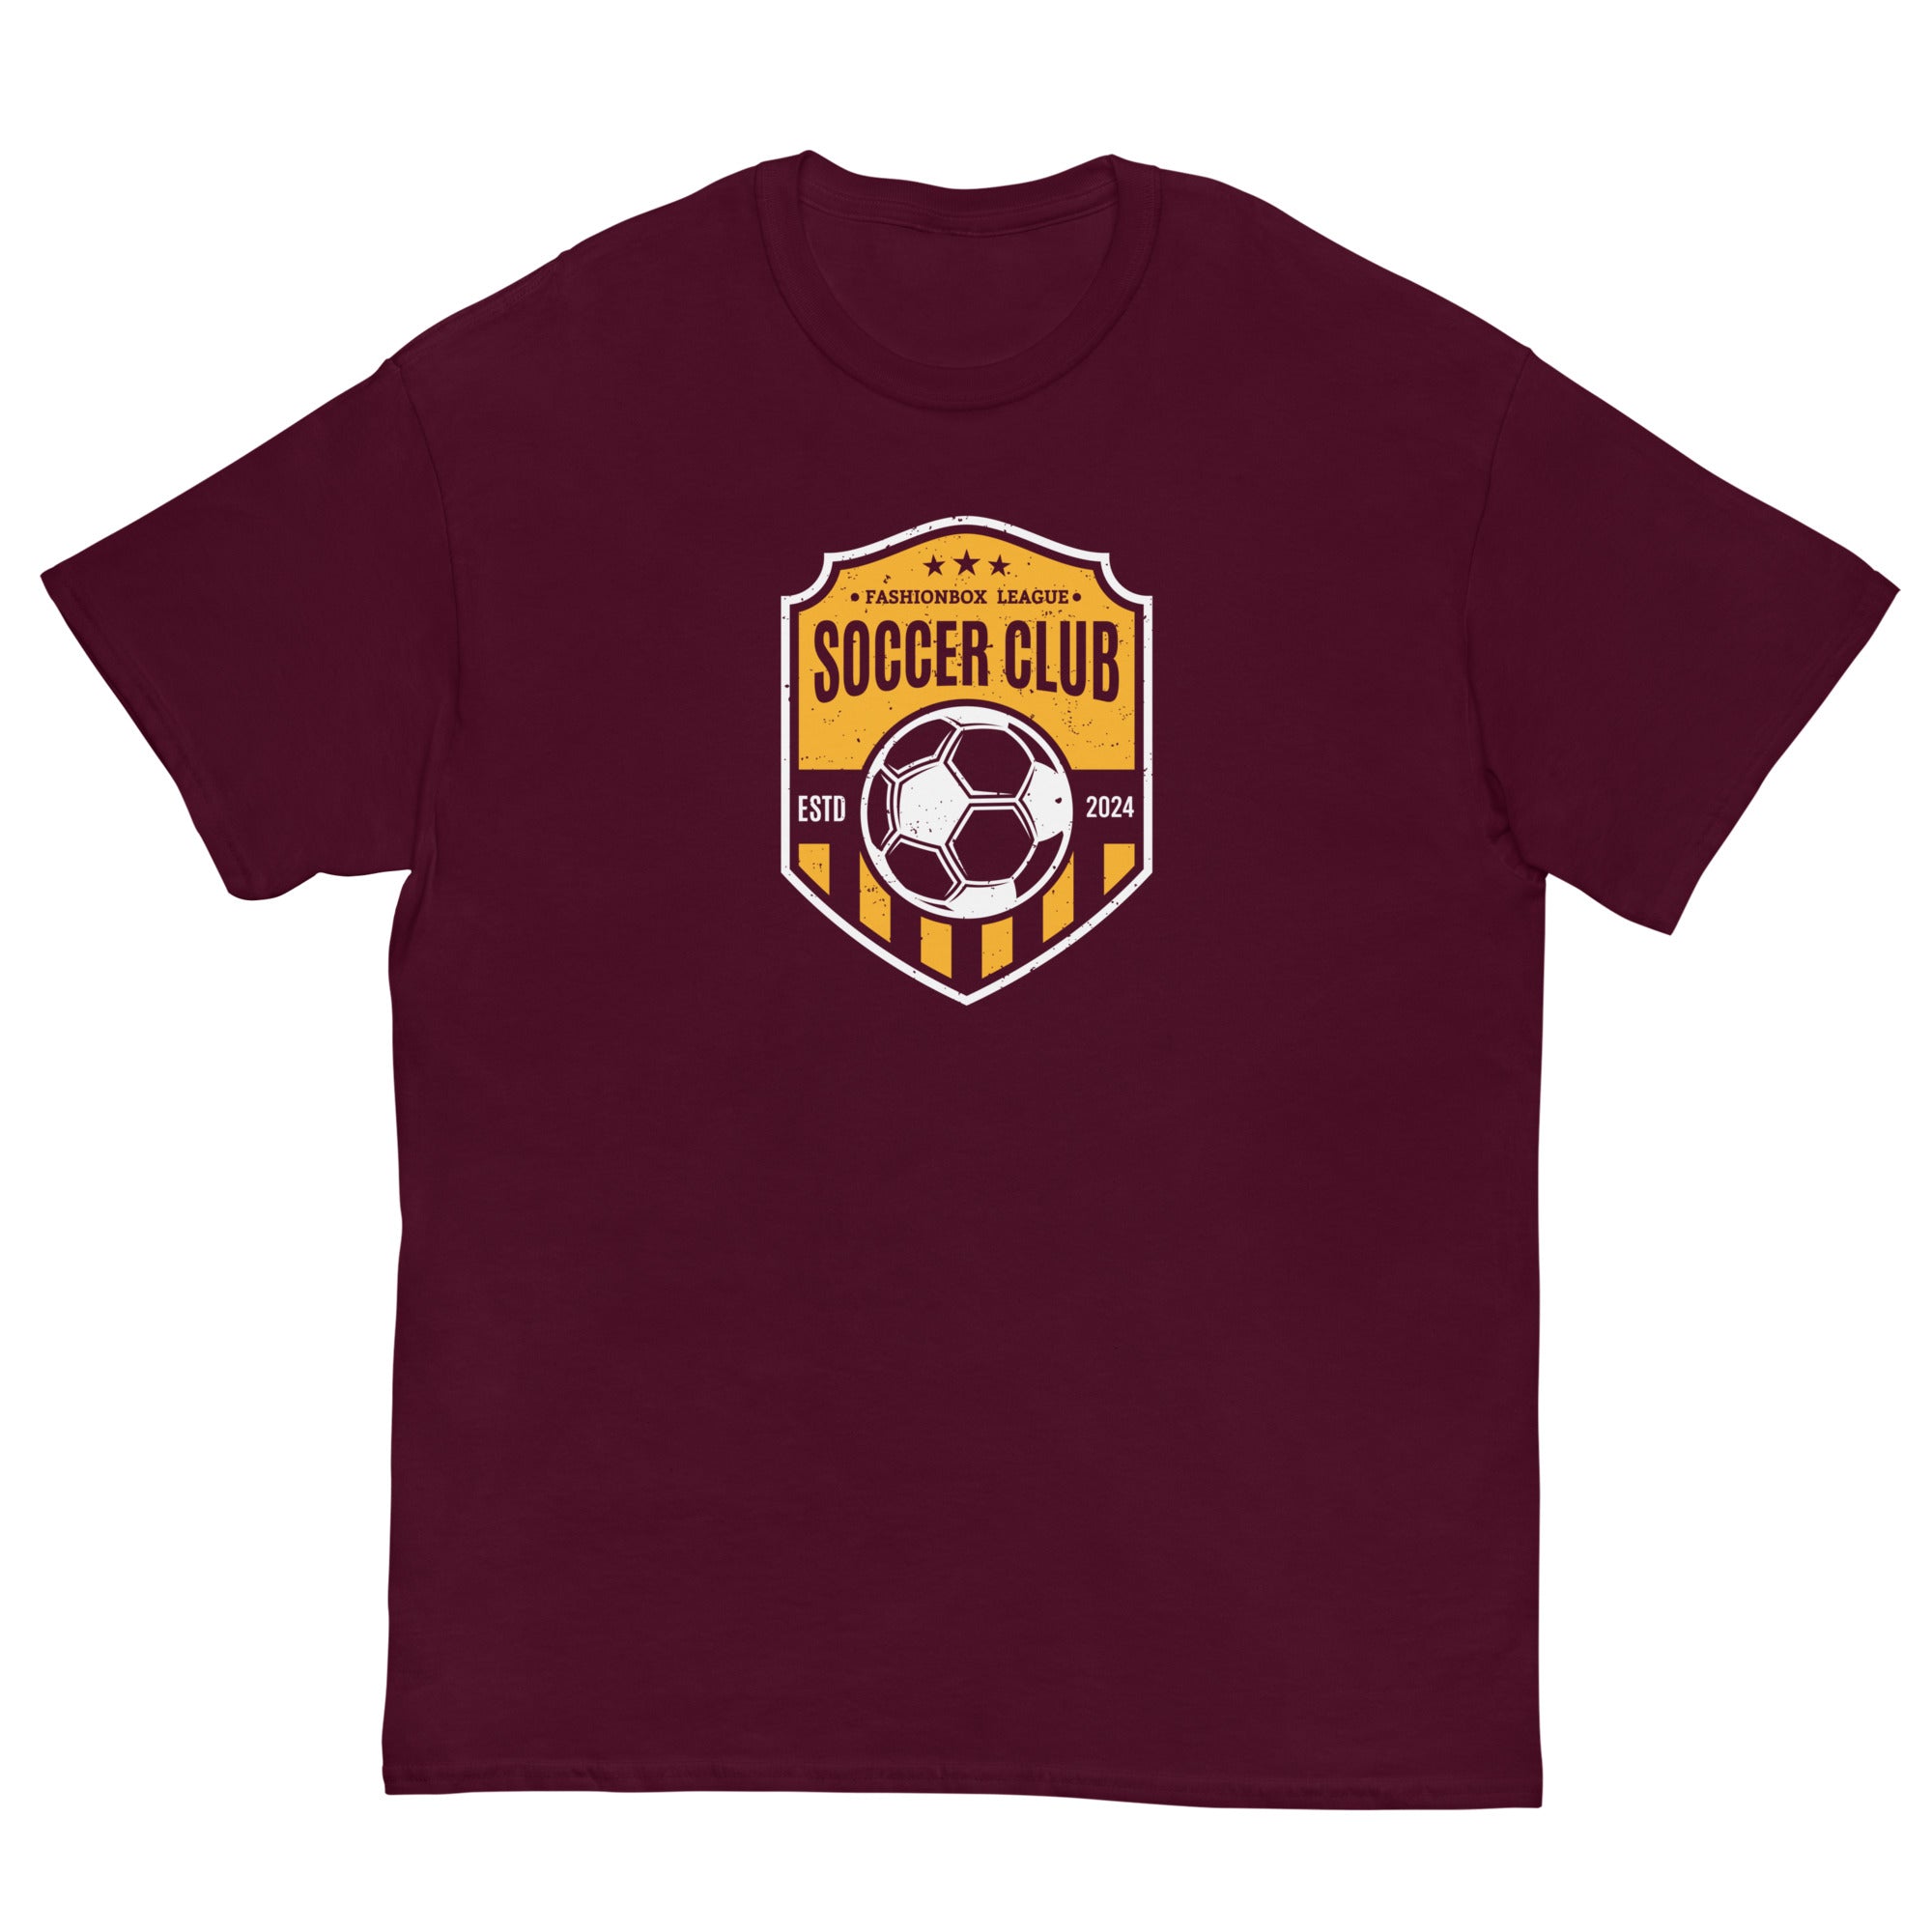 Soccer club FB T-shirt